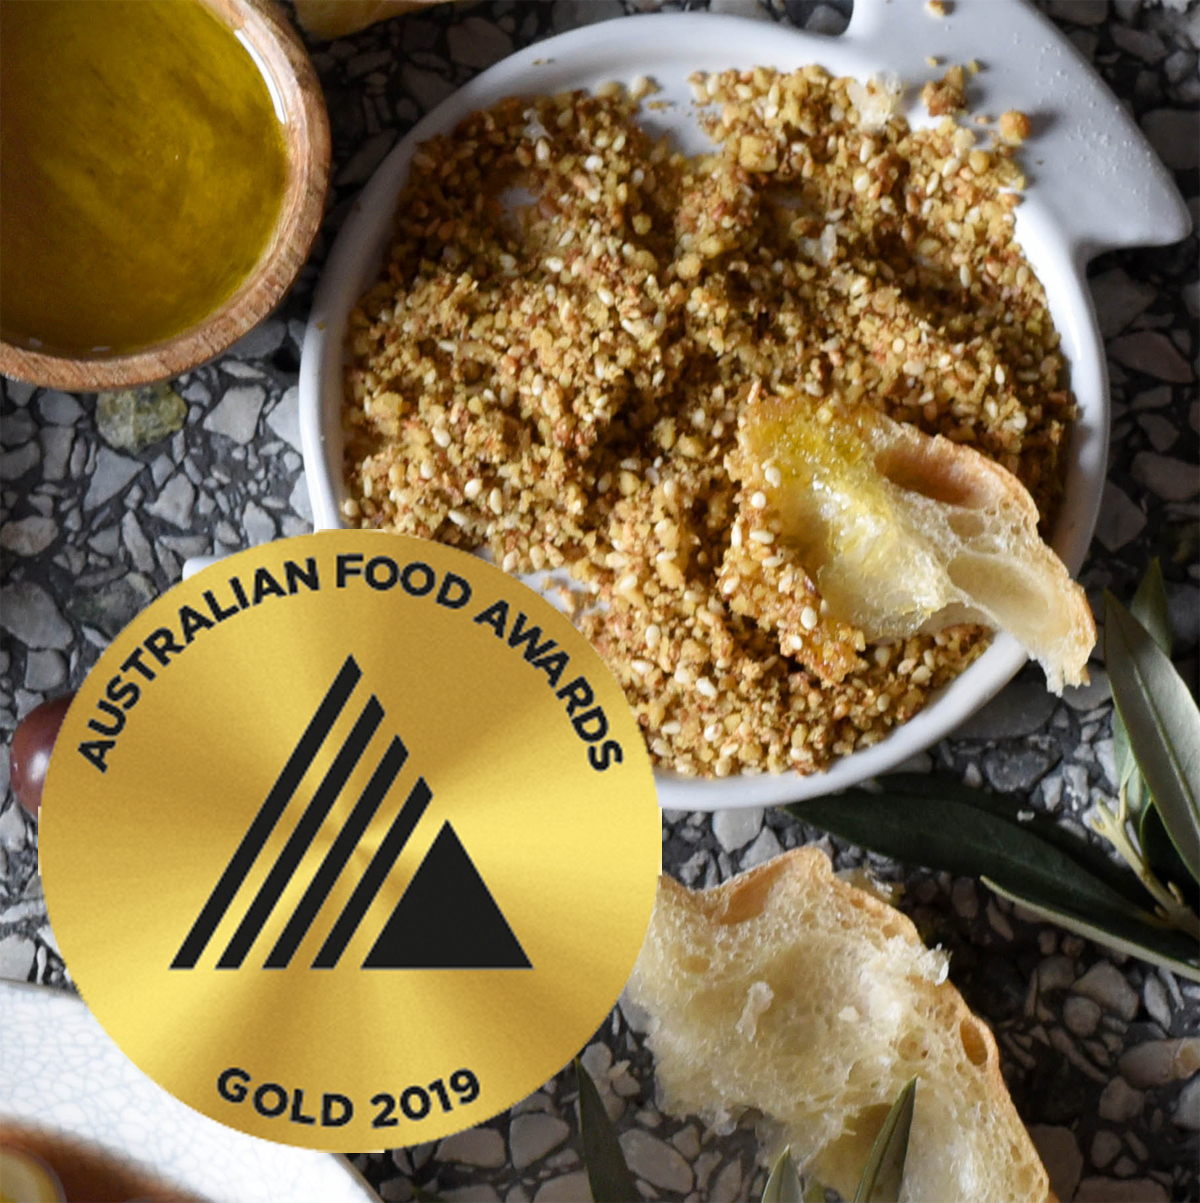 Gold at Australian Food Awards